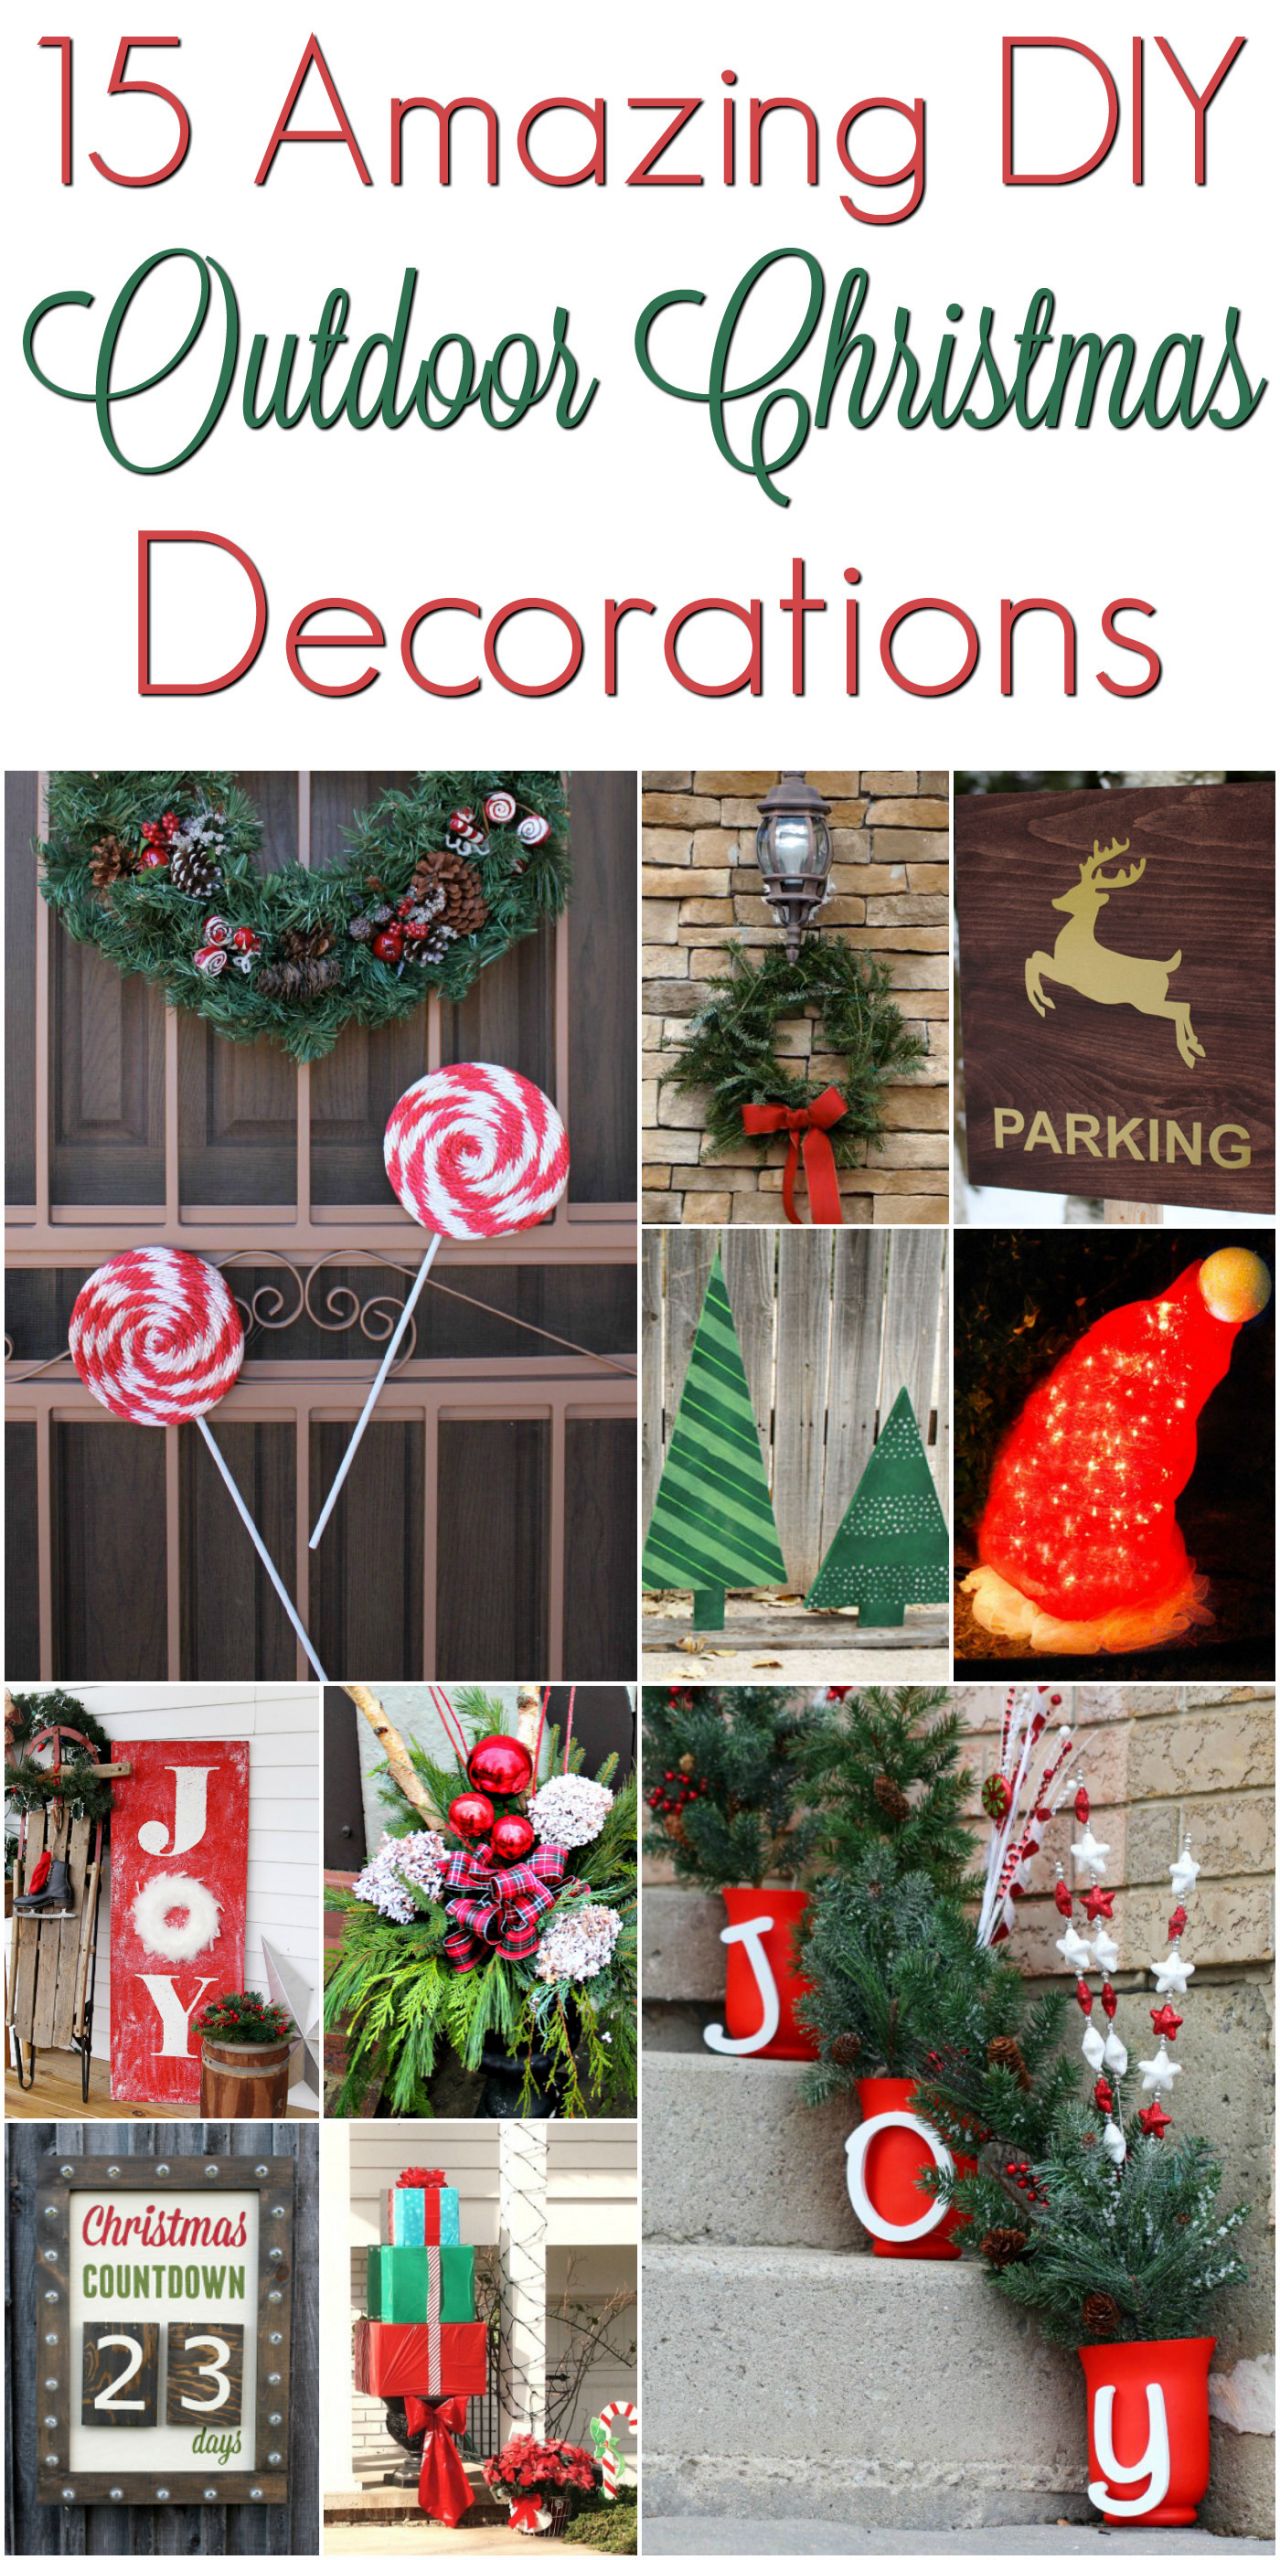 DIY Outdoor Decorating Ideas
 DIY Christmas Outdoor Decorations ChristmasDecorations